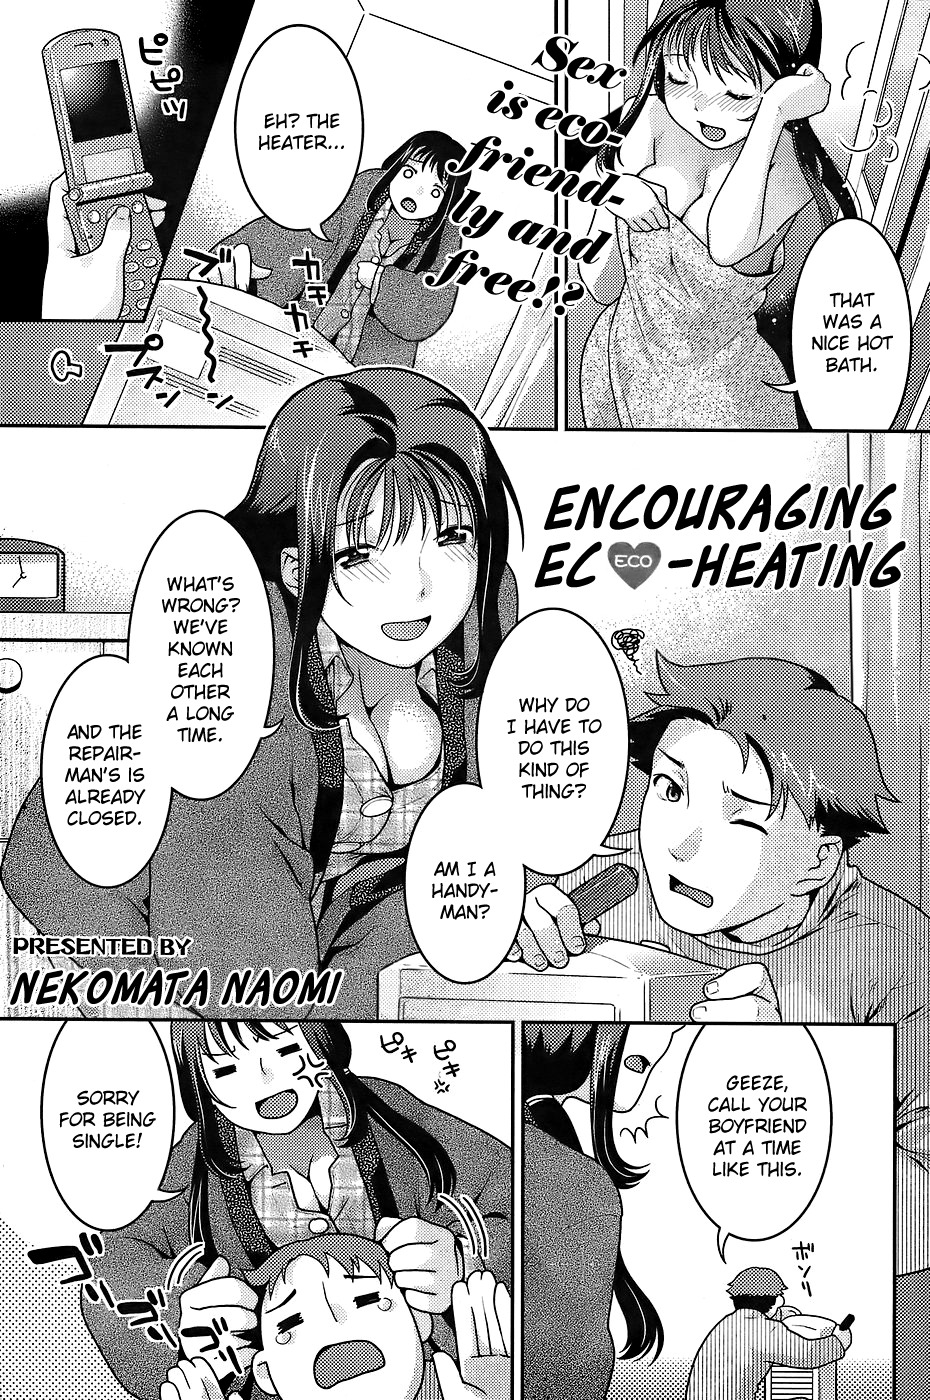 Encouraging Eco-heating hentai manga